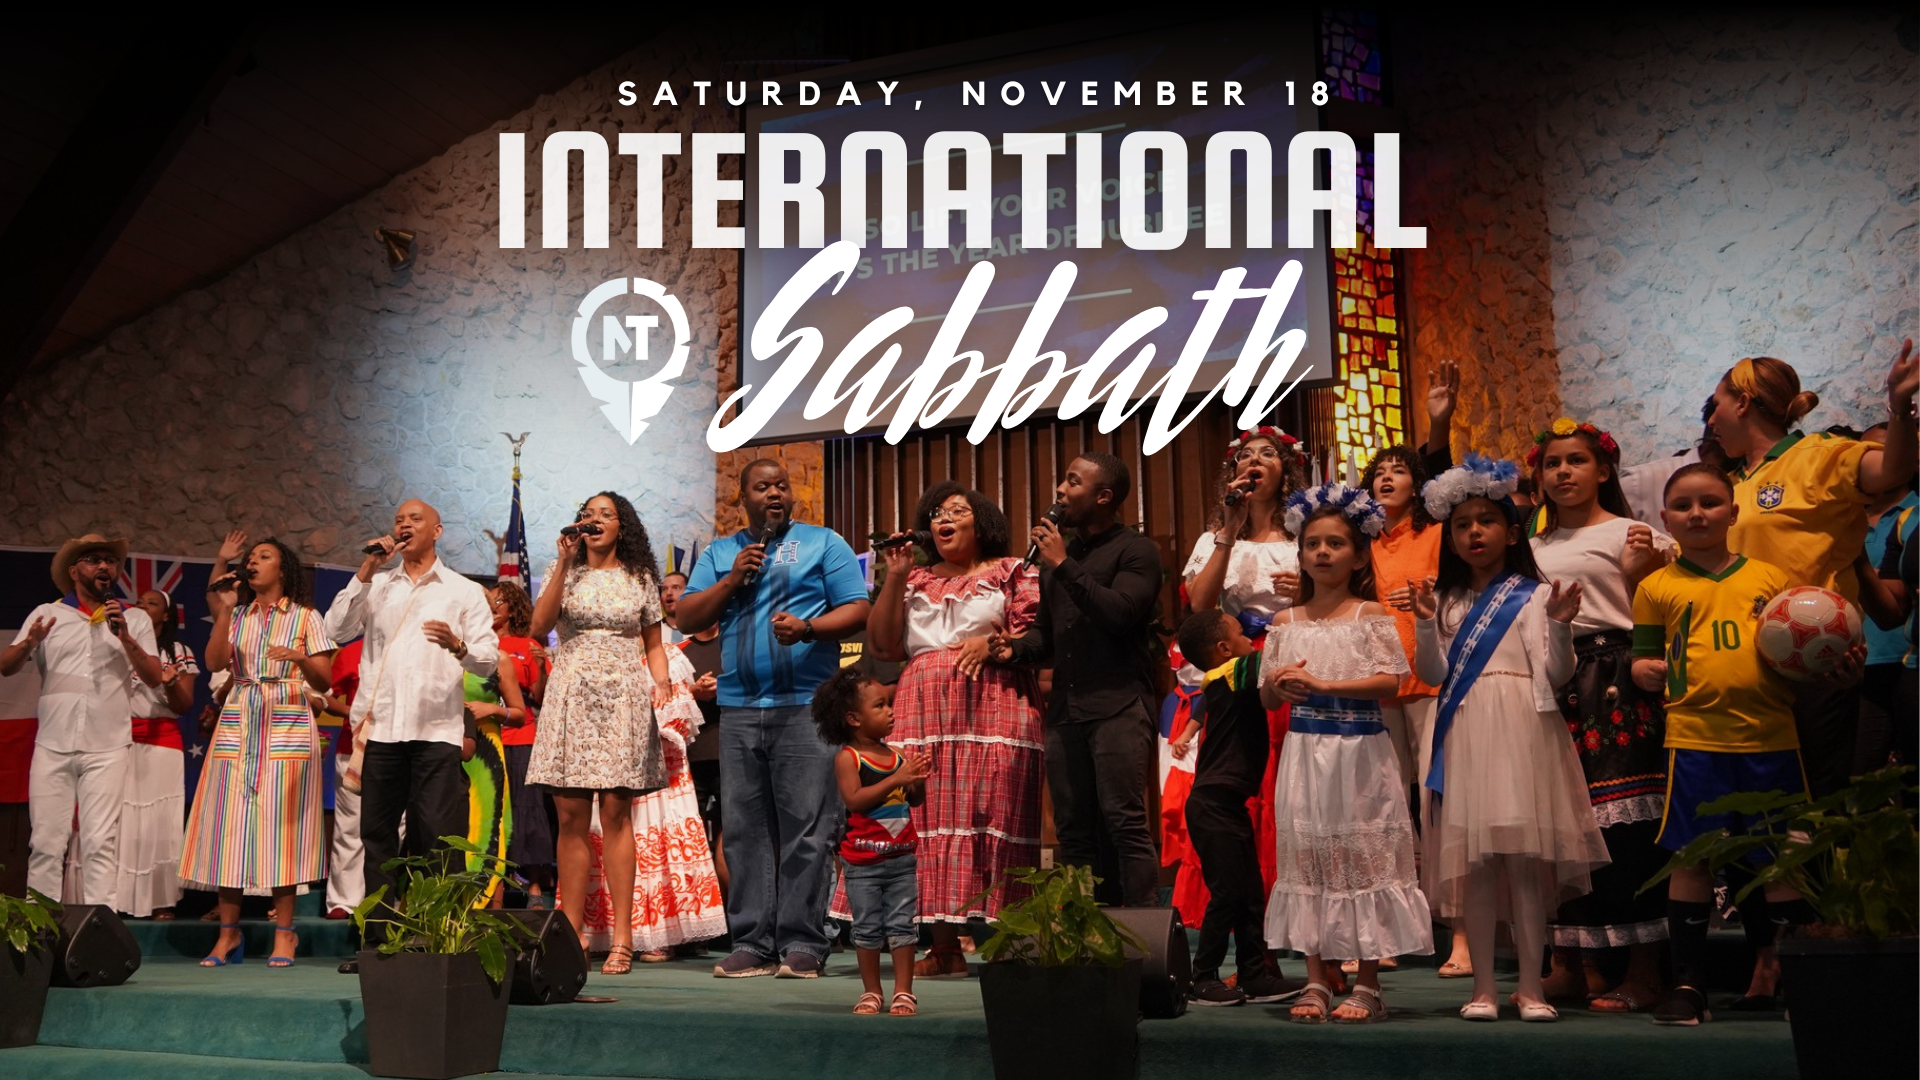 International Sabbath